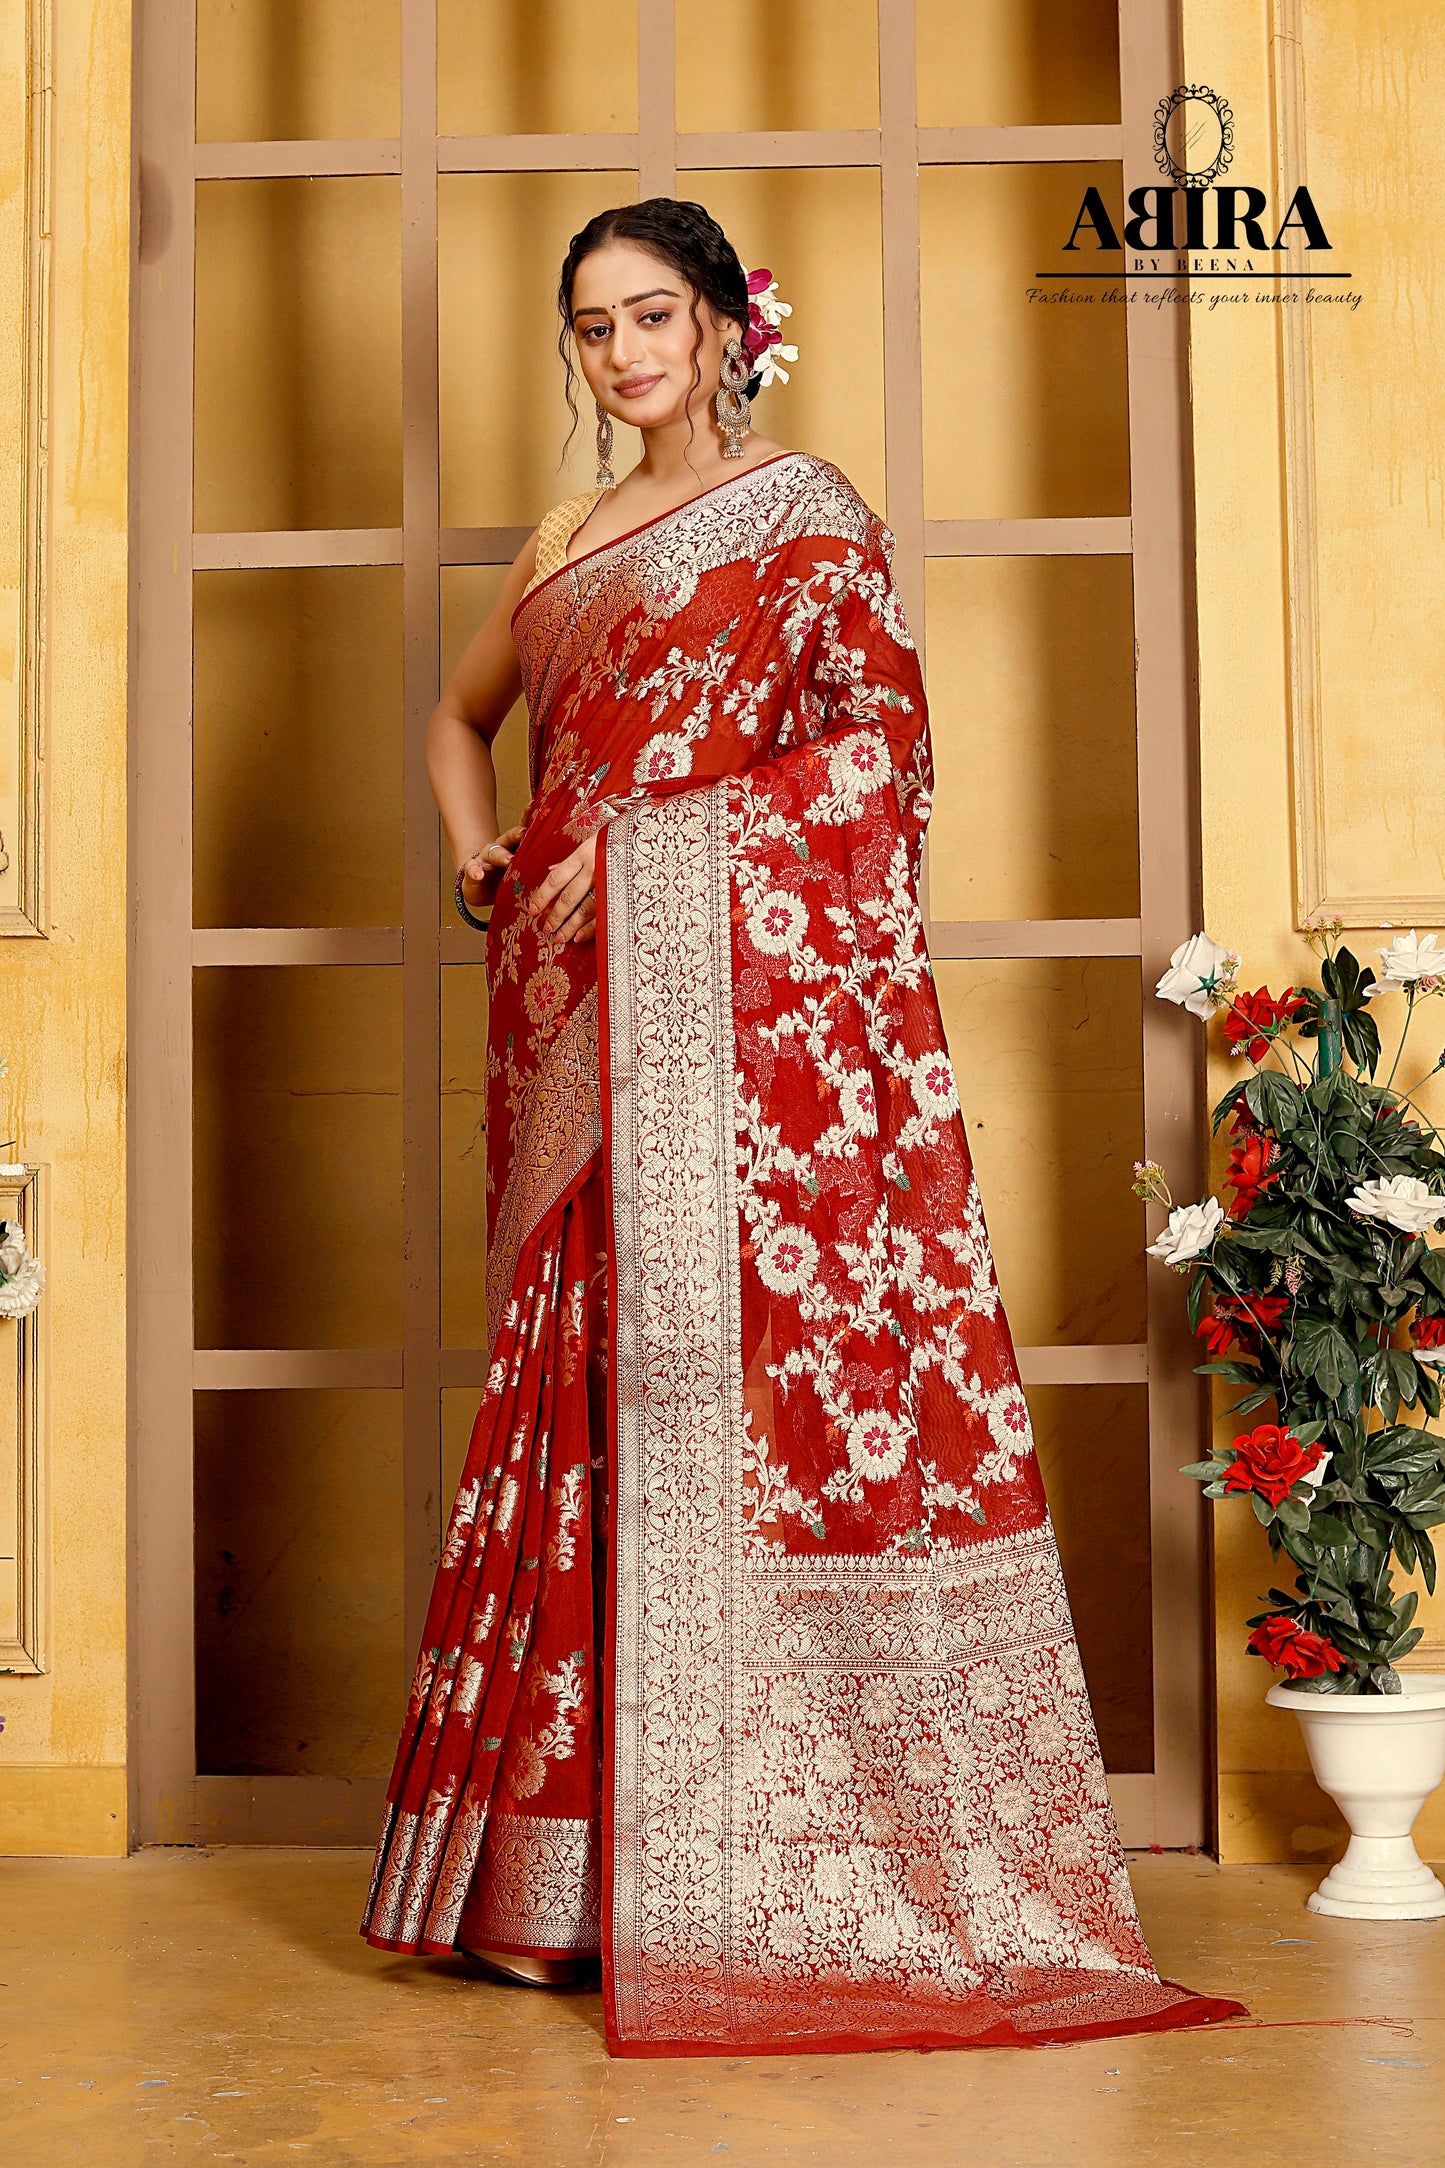 Brown Banaras Soft Georgette Jaal silk - AbirabyBeena